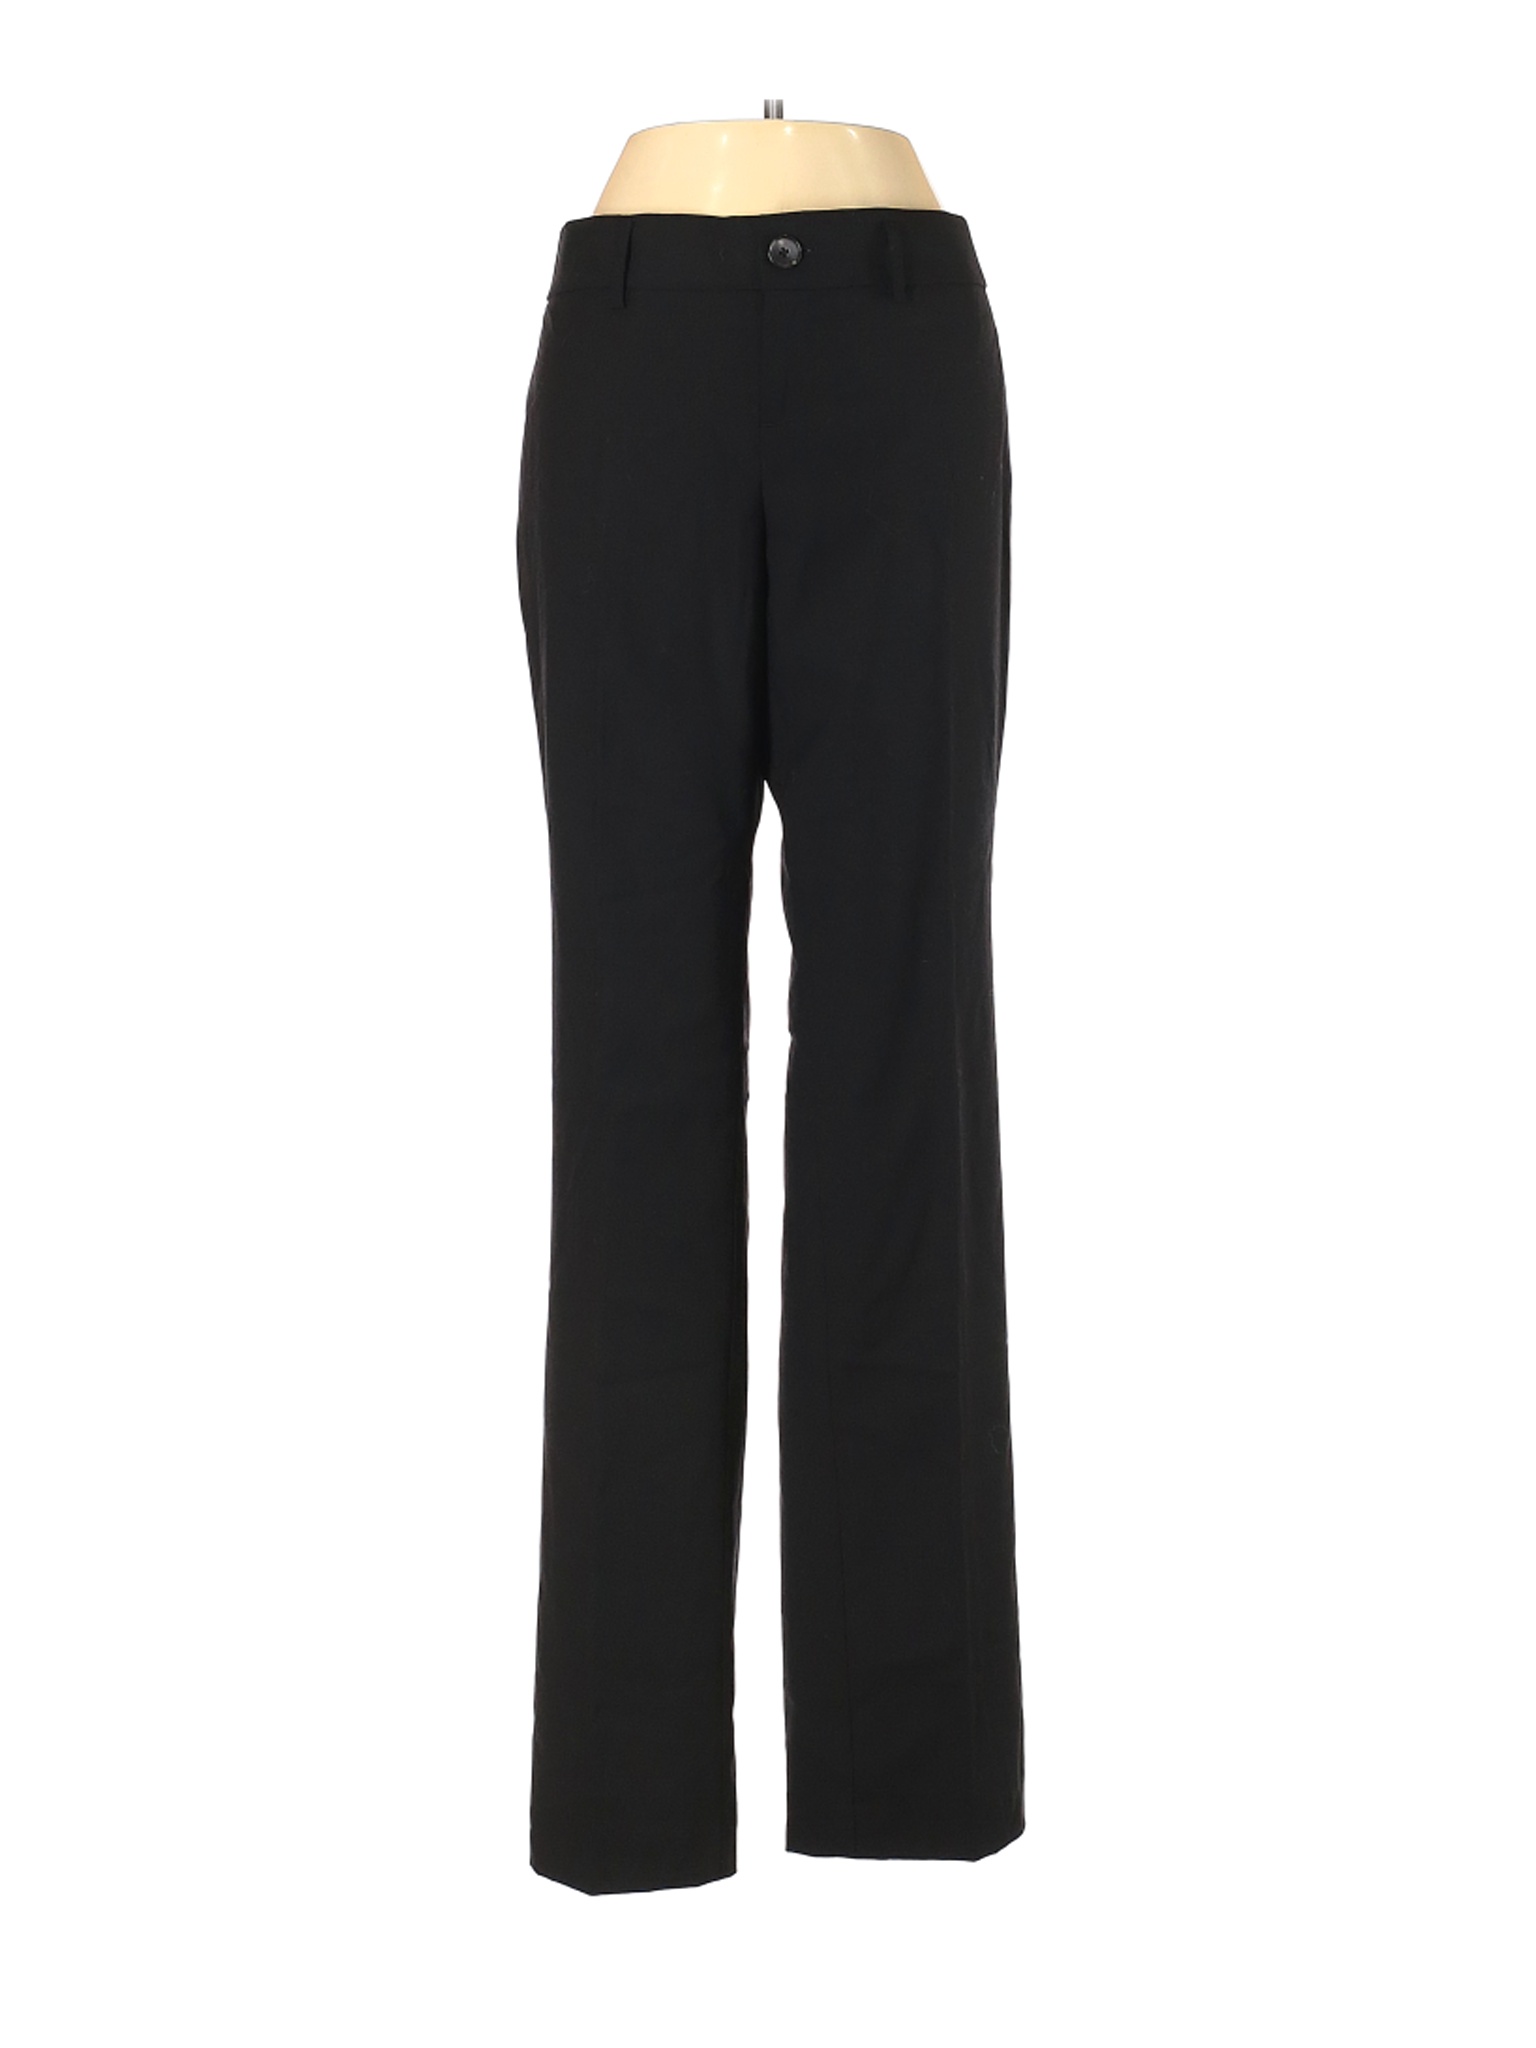 Banana Republic Women Black Wool Pants 2 | eBay